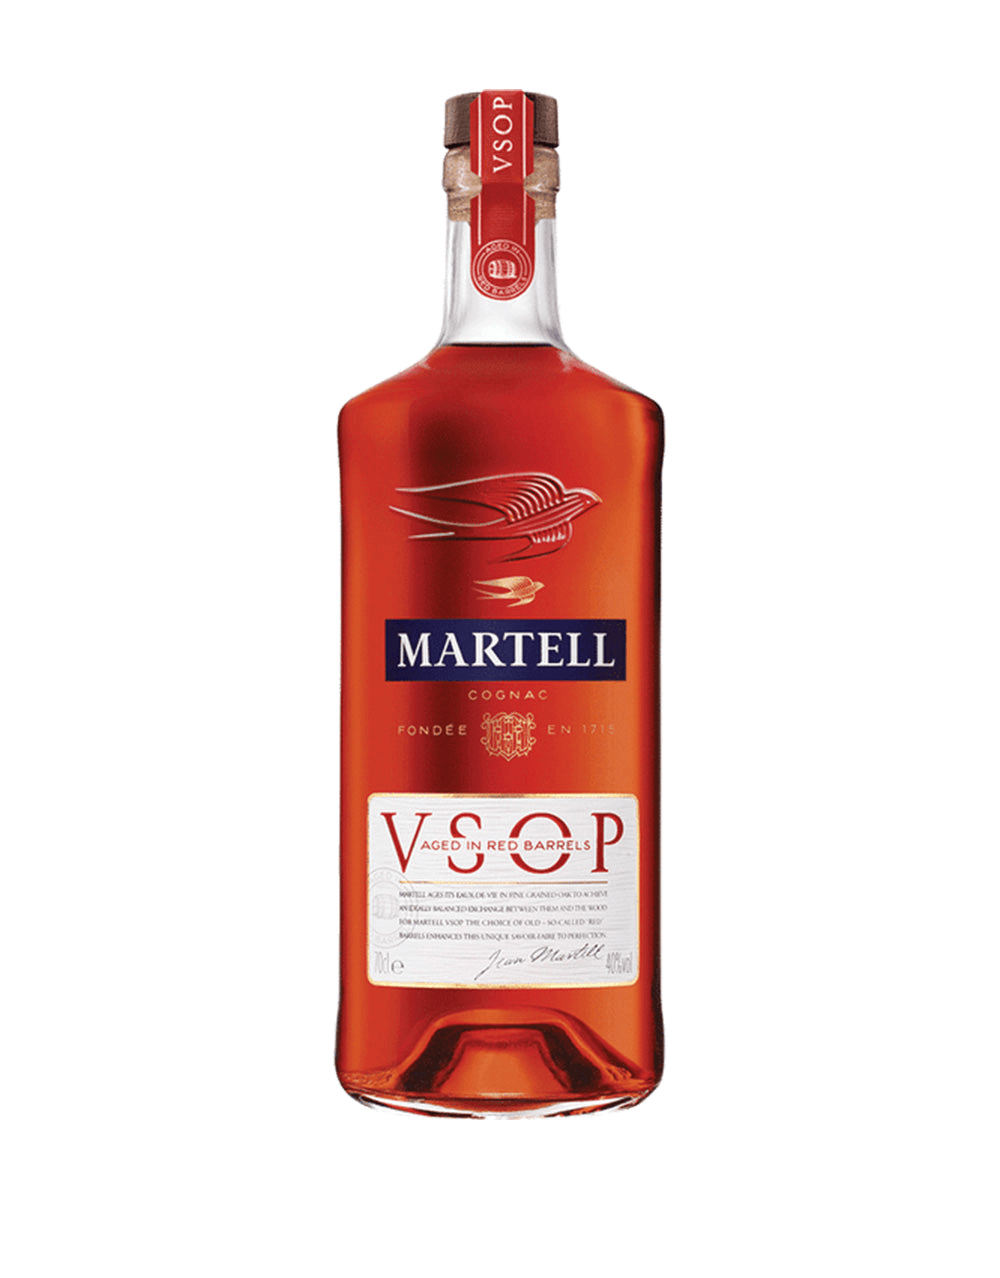 Martell V.S.O.P Aged in Red Barrels Cognac